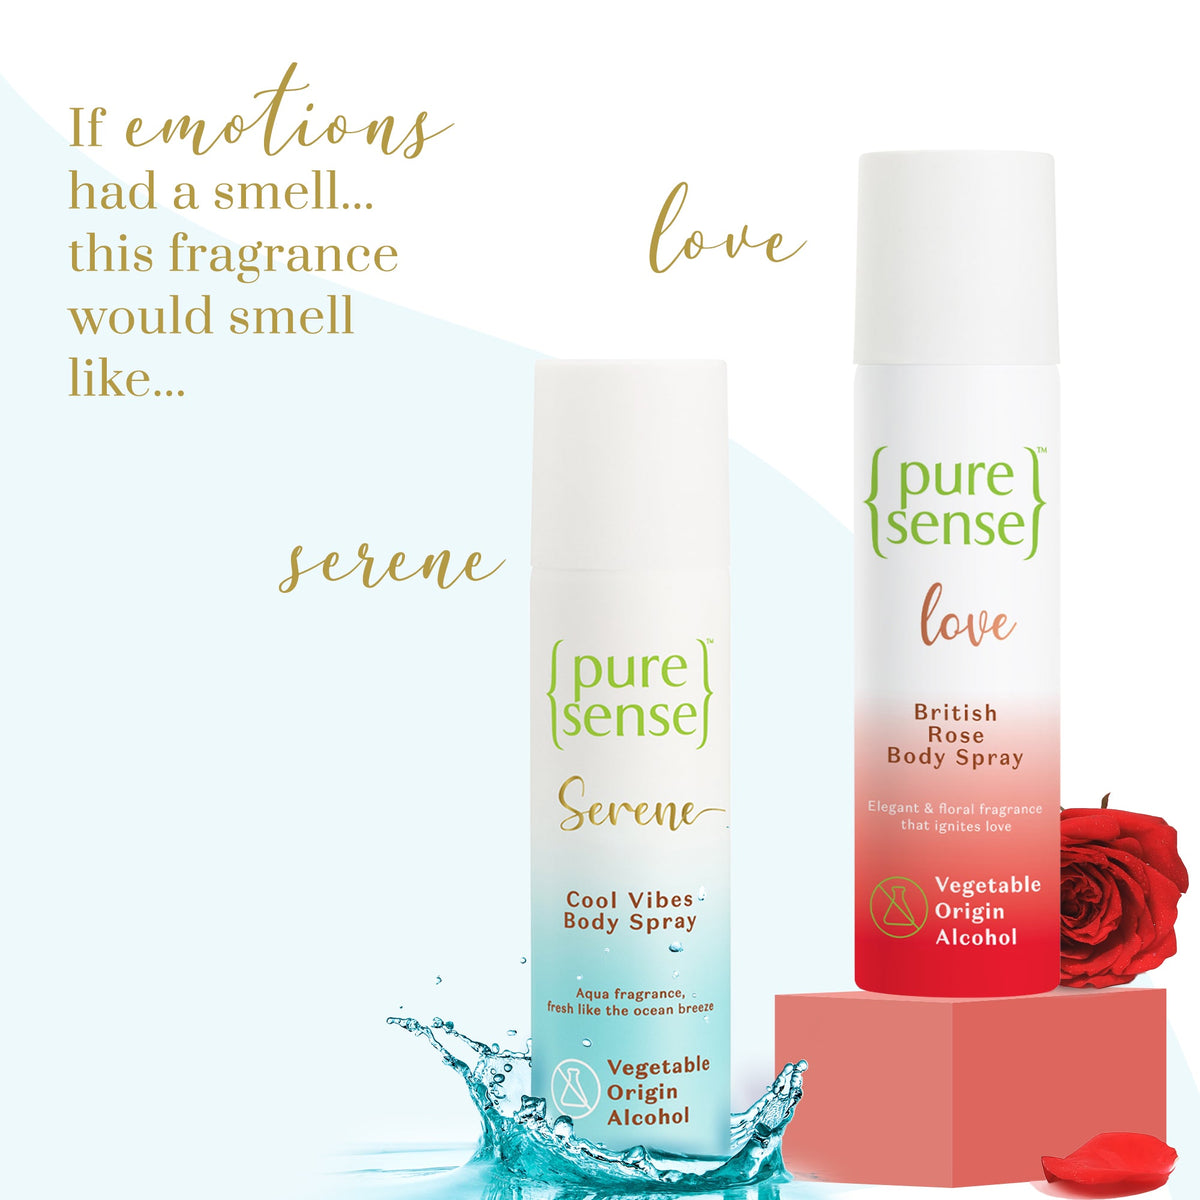 PureSense Serene Cool Vibes Body Spray & PureSense Love British Rose Body Spray combo 150ml + 150ml | 300ml